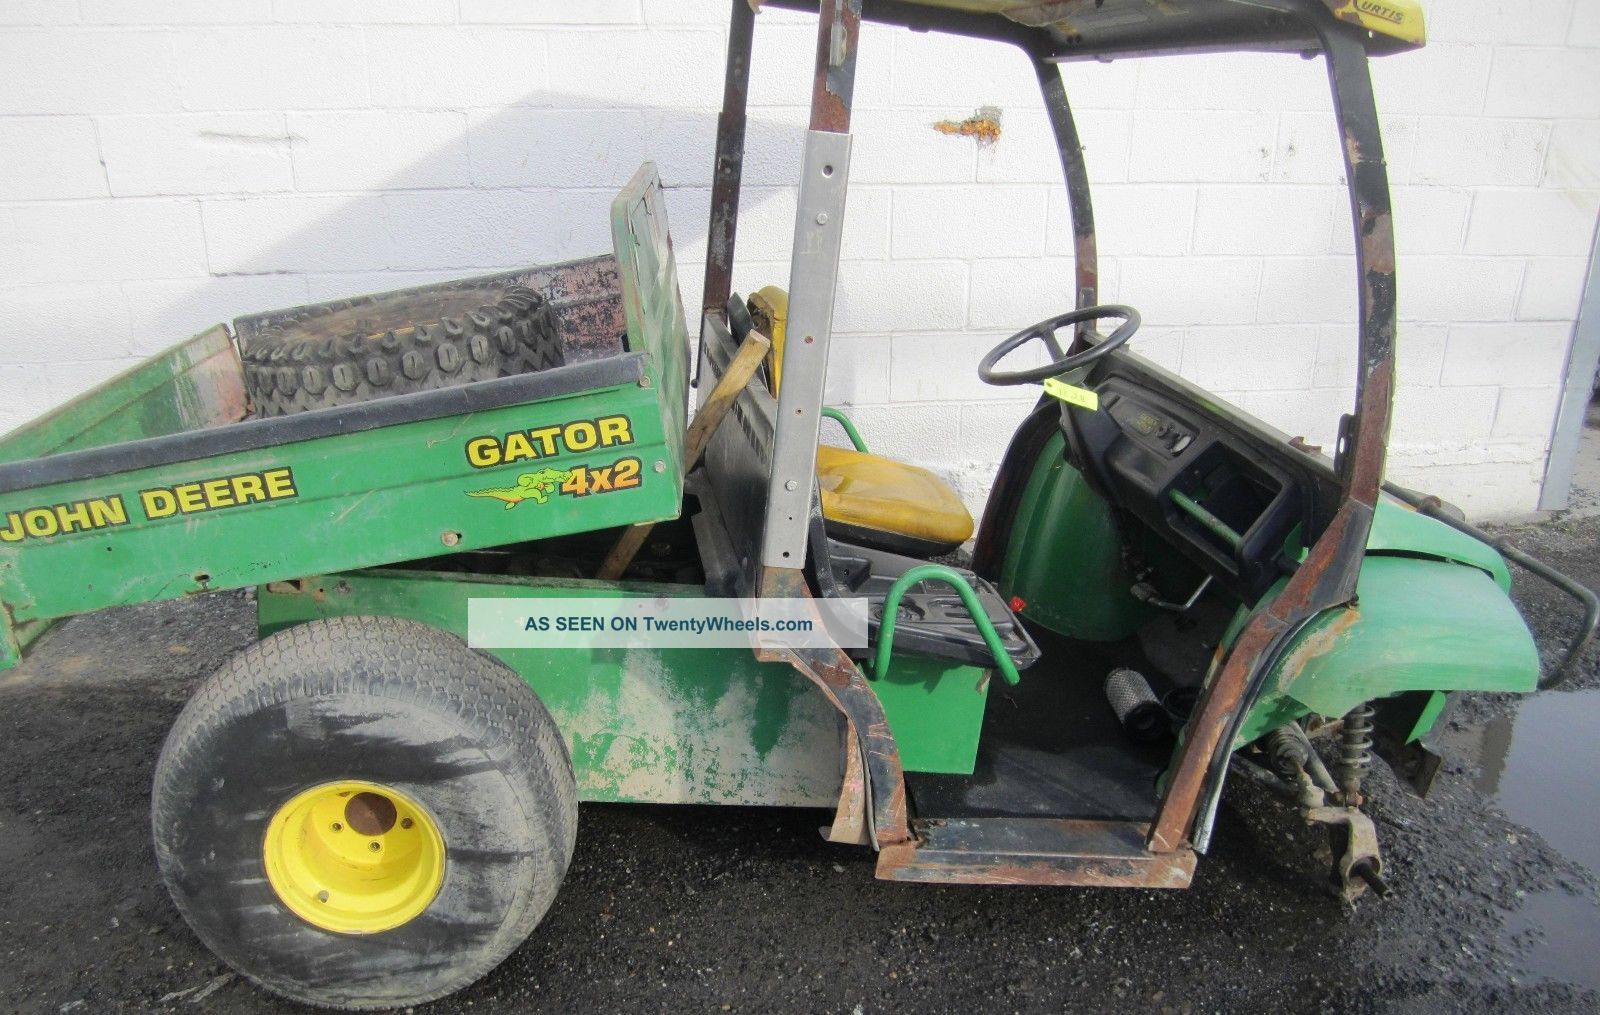 John Deere 4x2 Gator Utility Vehicle - Gas - - Parts Only ...